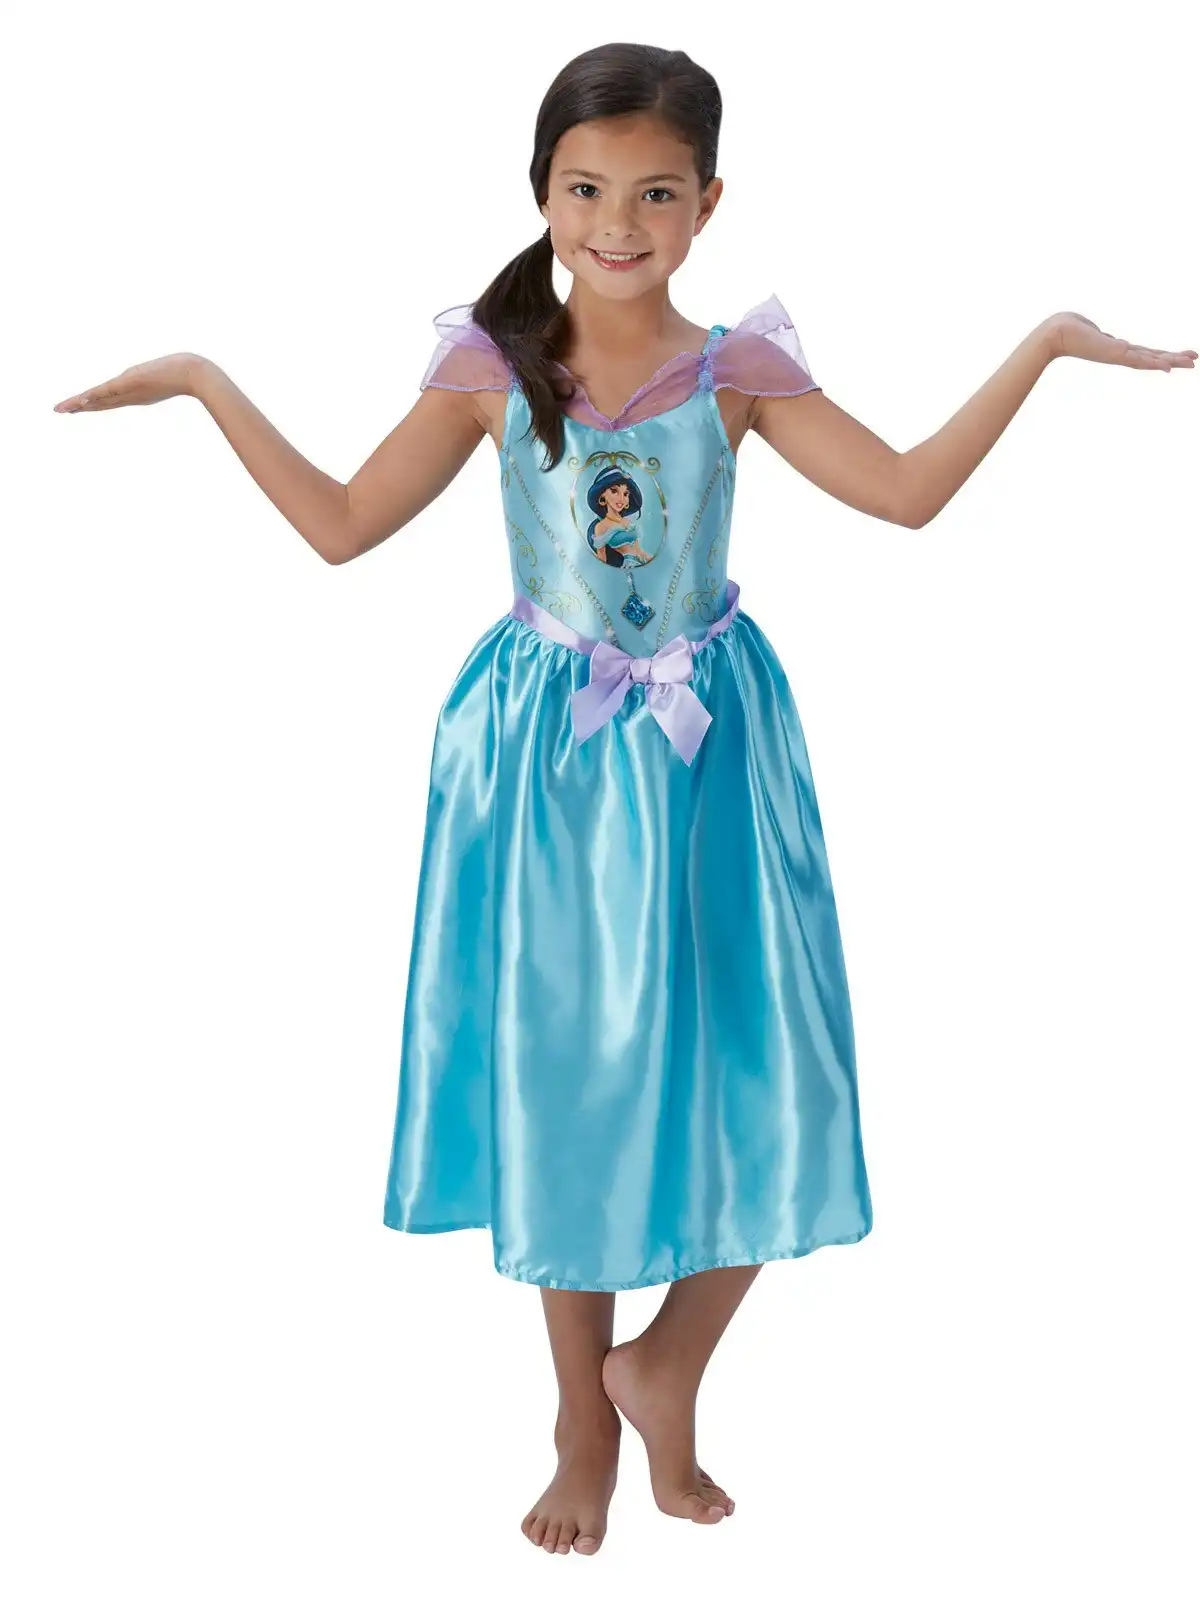 Disney Jasmine Fairytales Opp Dress Up Costume Kids/Children/Girls Size 4-6